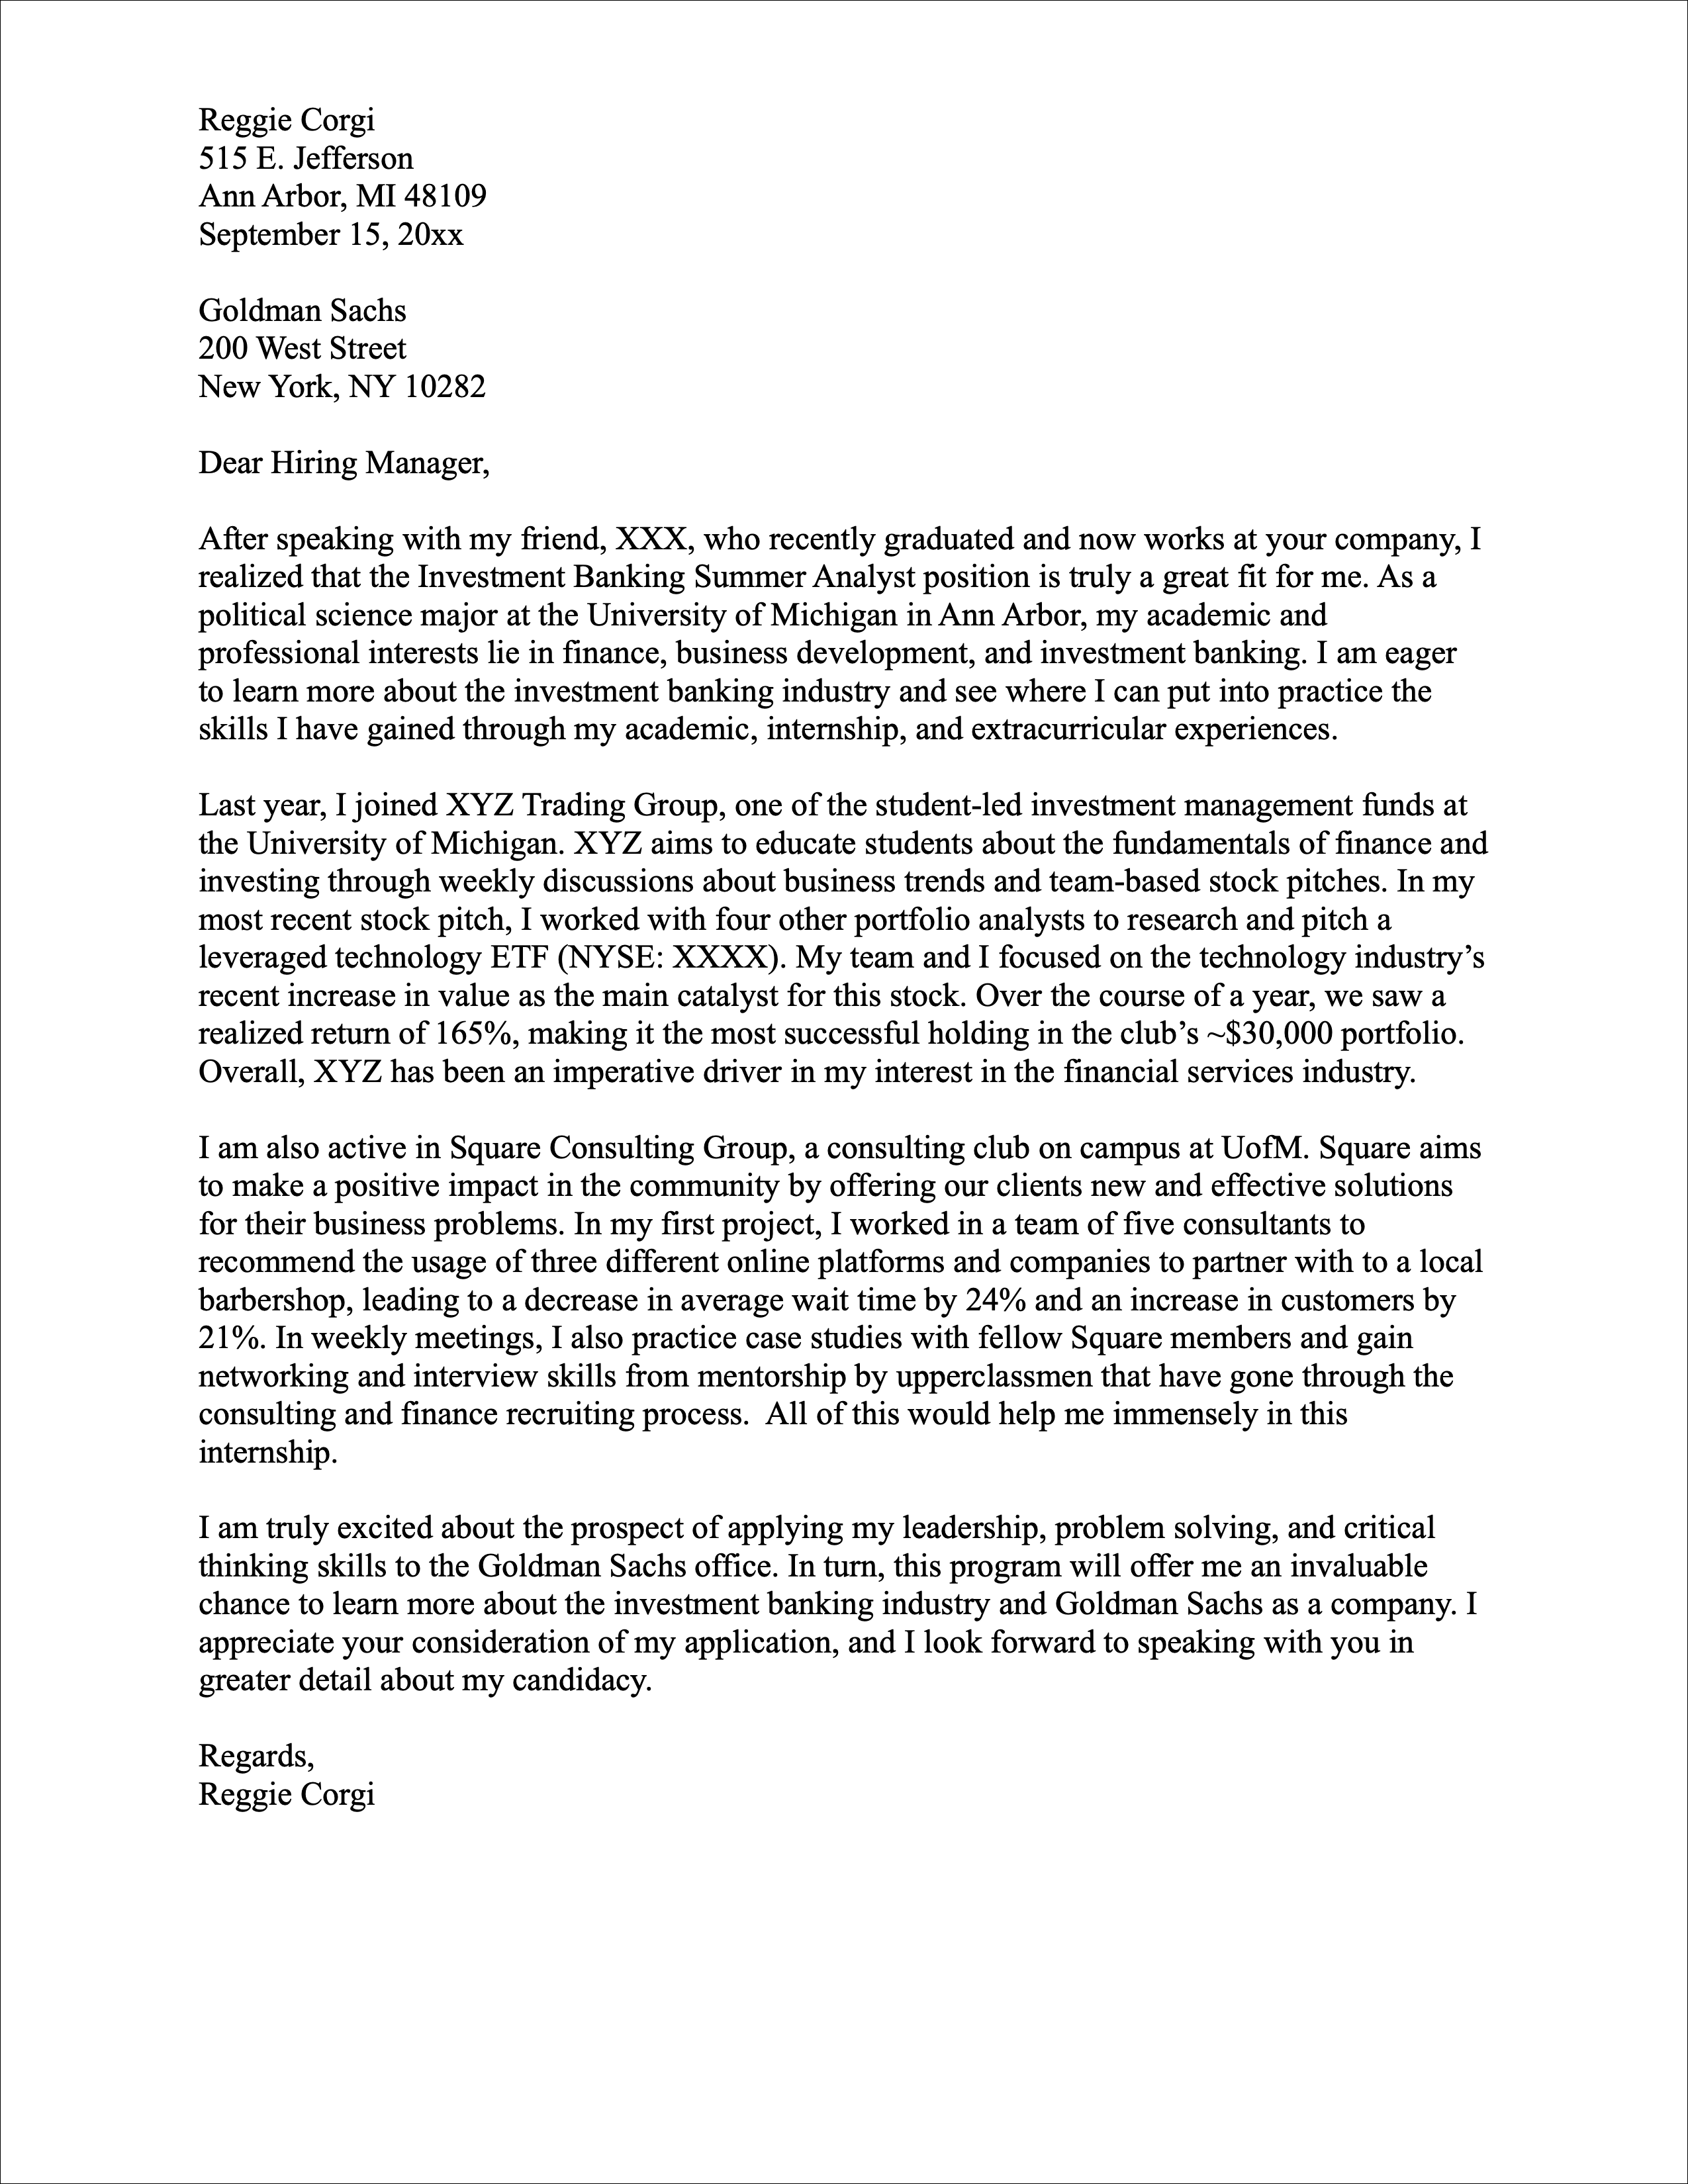 Reggie Corgi Cover Letter Example